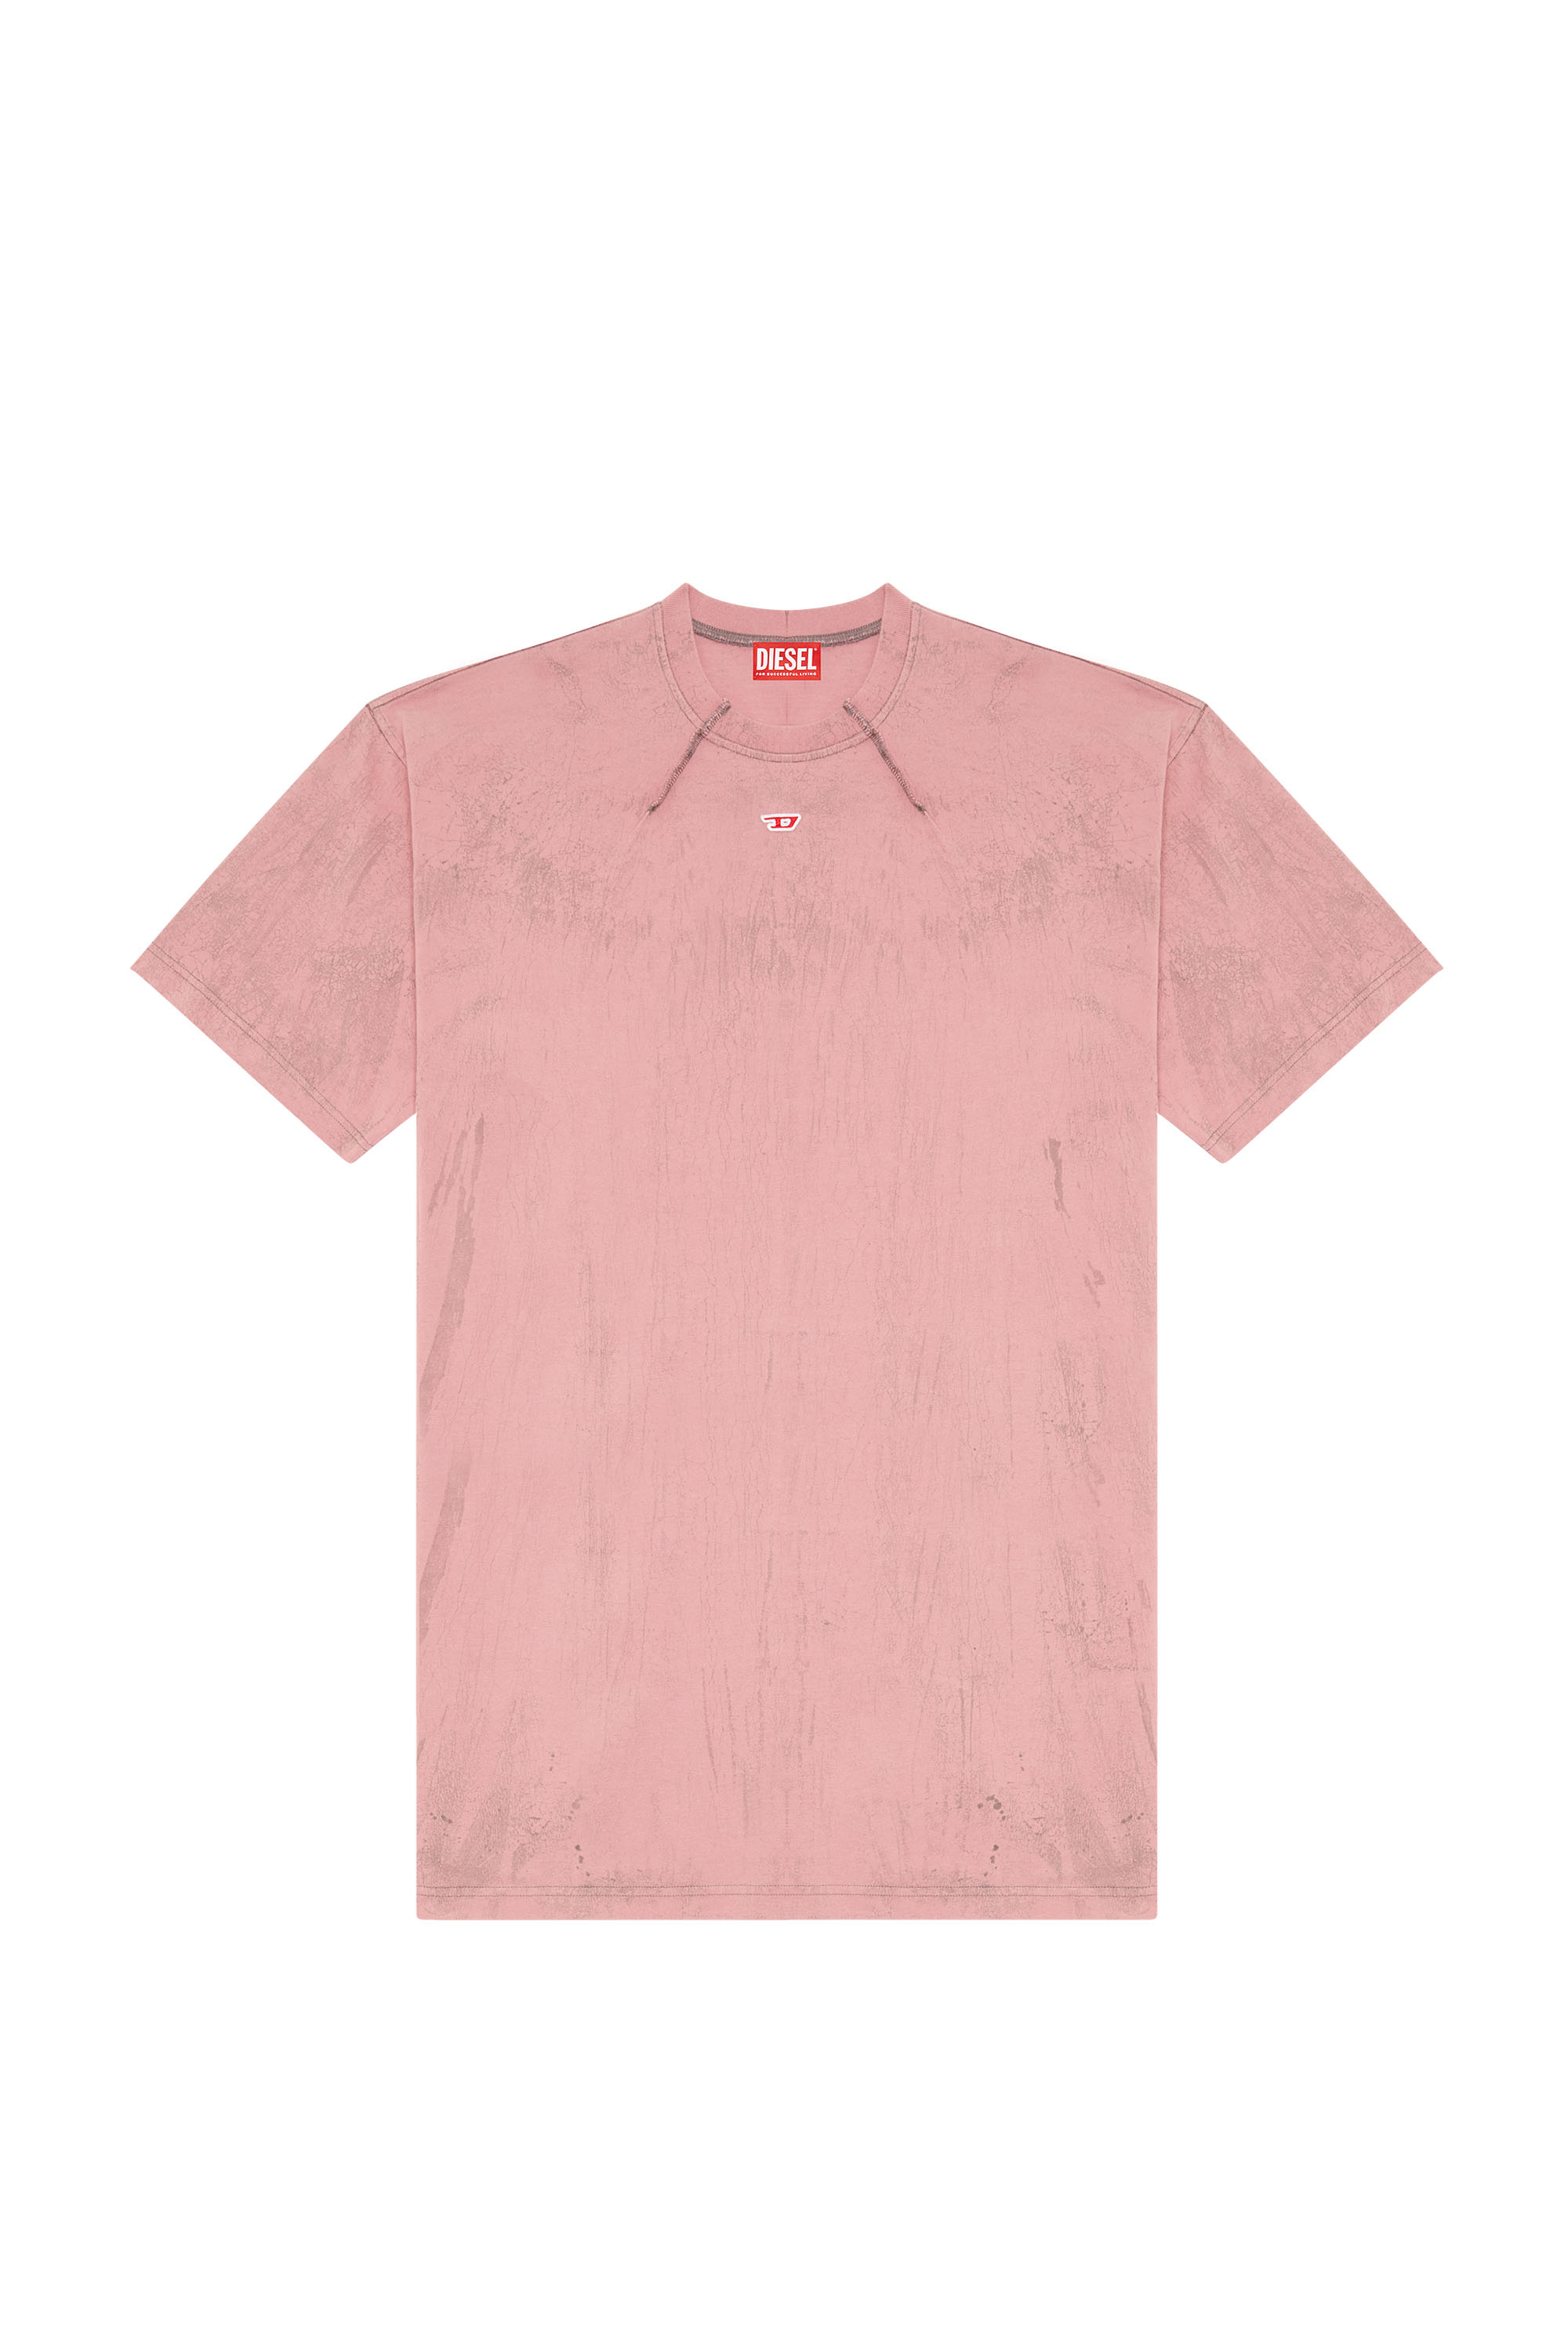 Diesel - T-COS, Homme T-shirt en jersey effet plâtre in Rose - Image 4